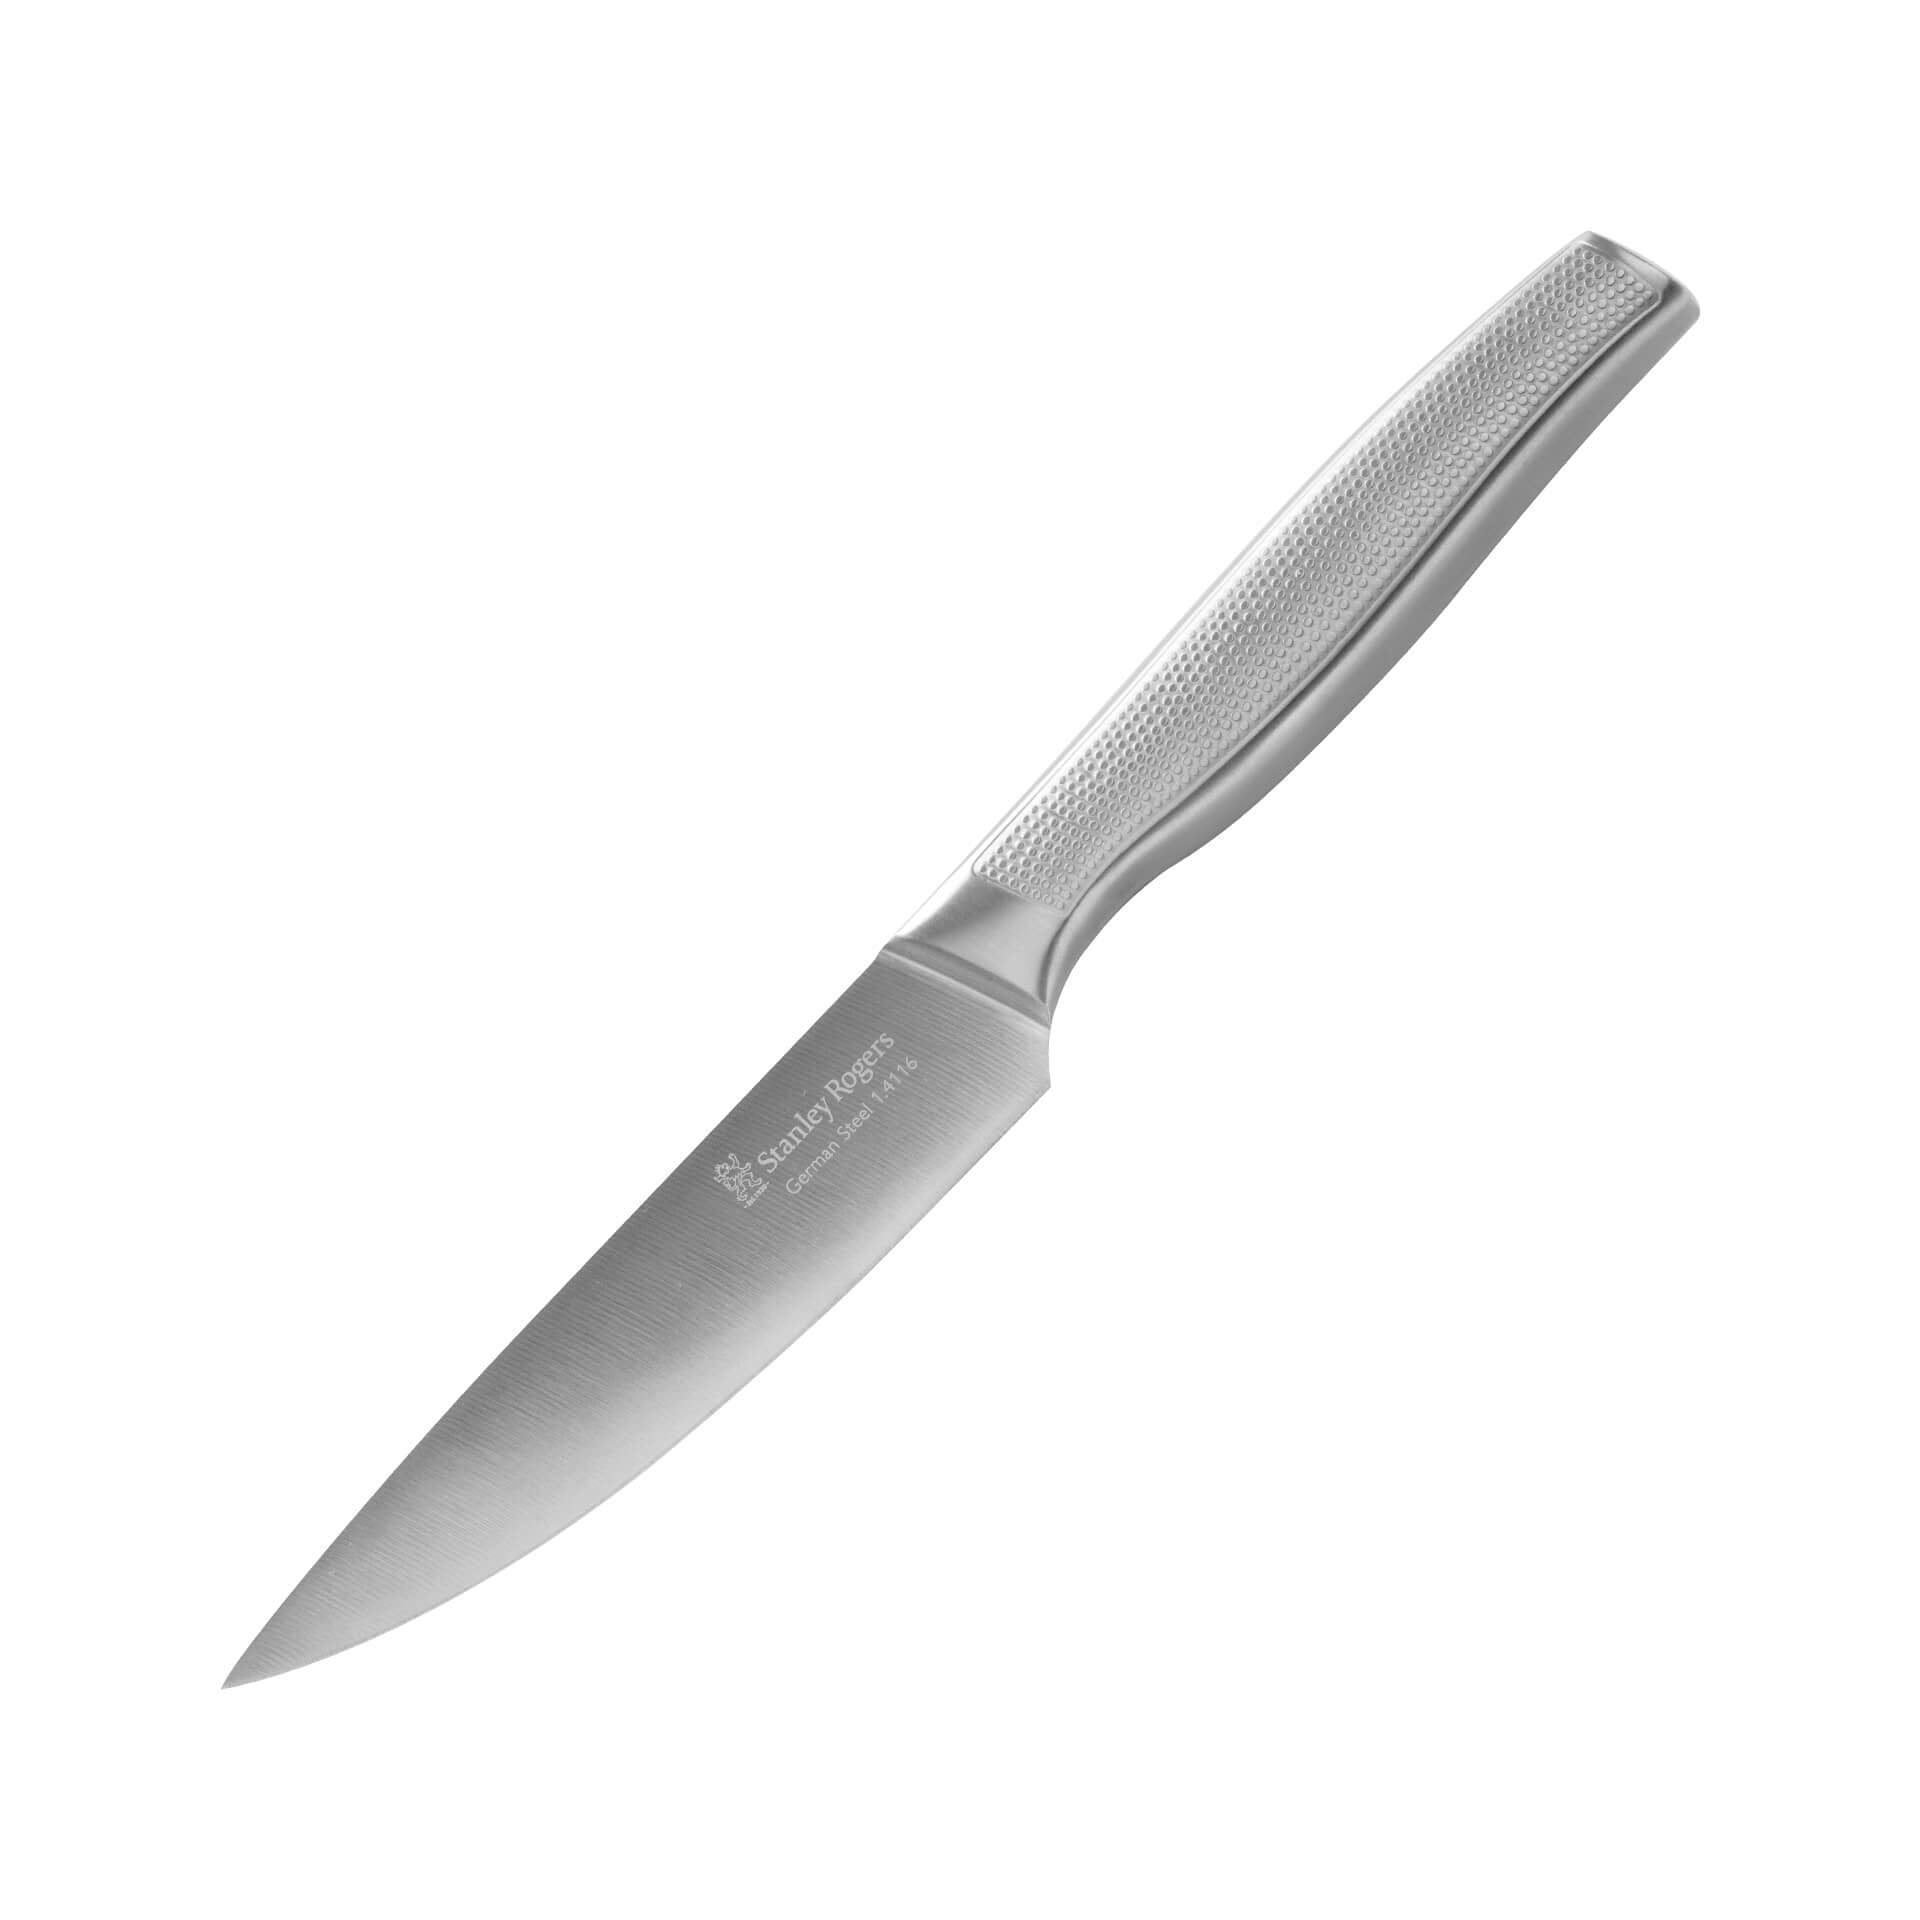 سكين مطبخ ستانلي روجرز ، بريسيشن ، ستانليس ستيل الماني